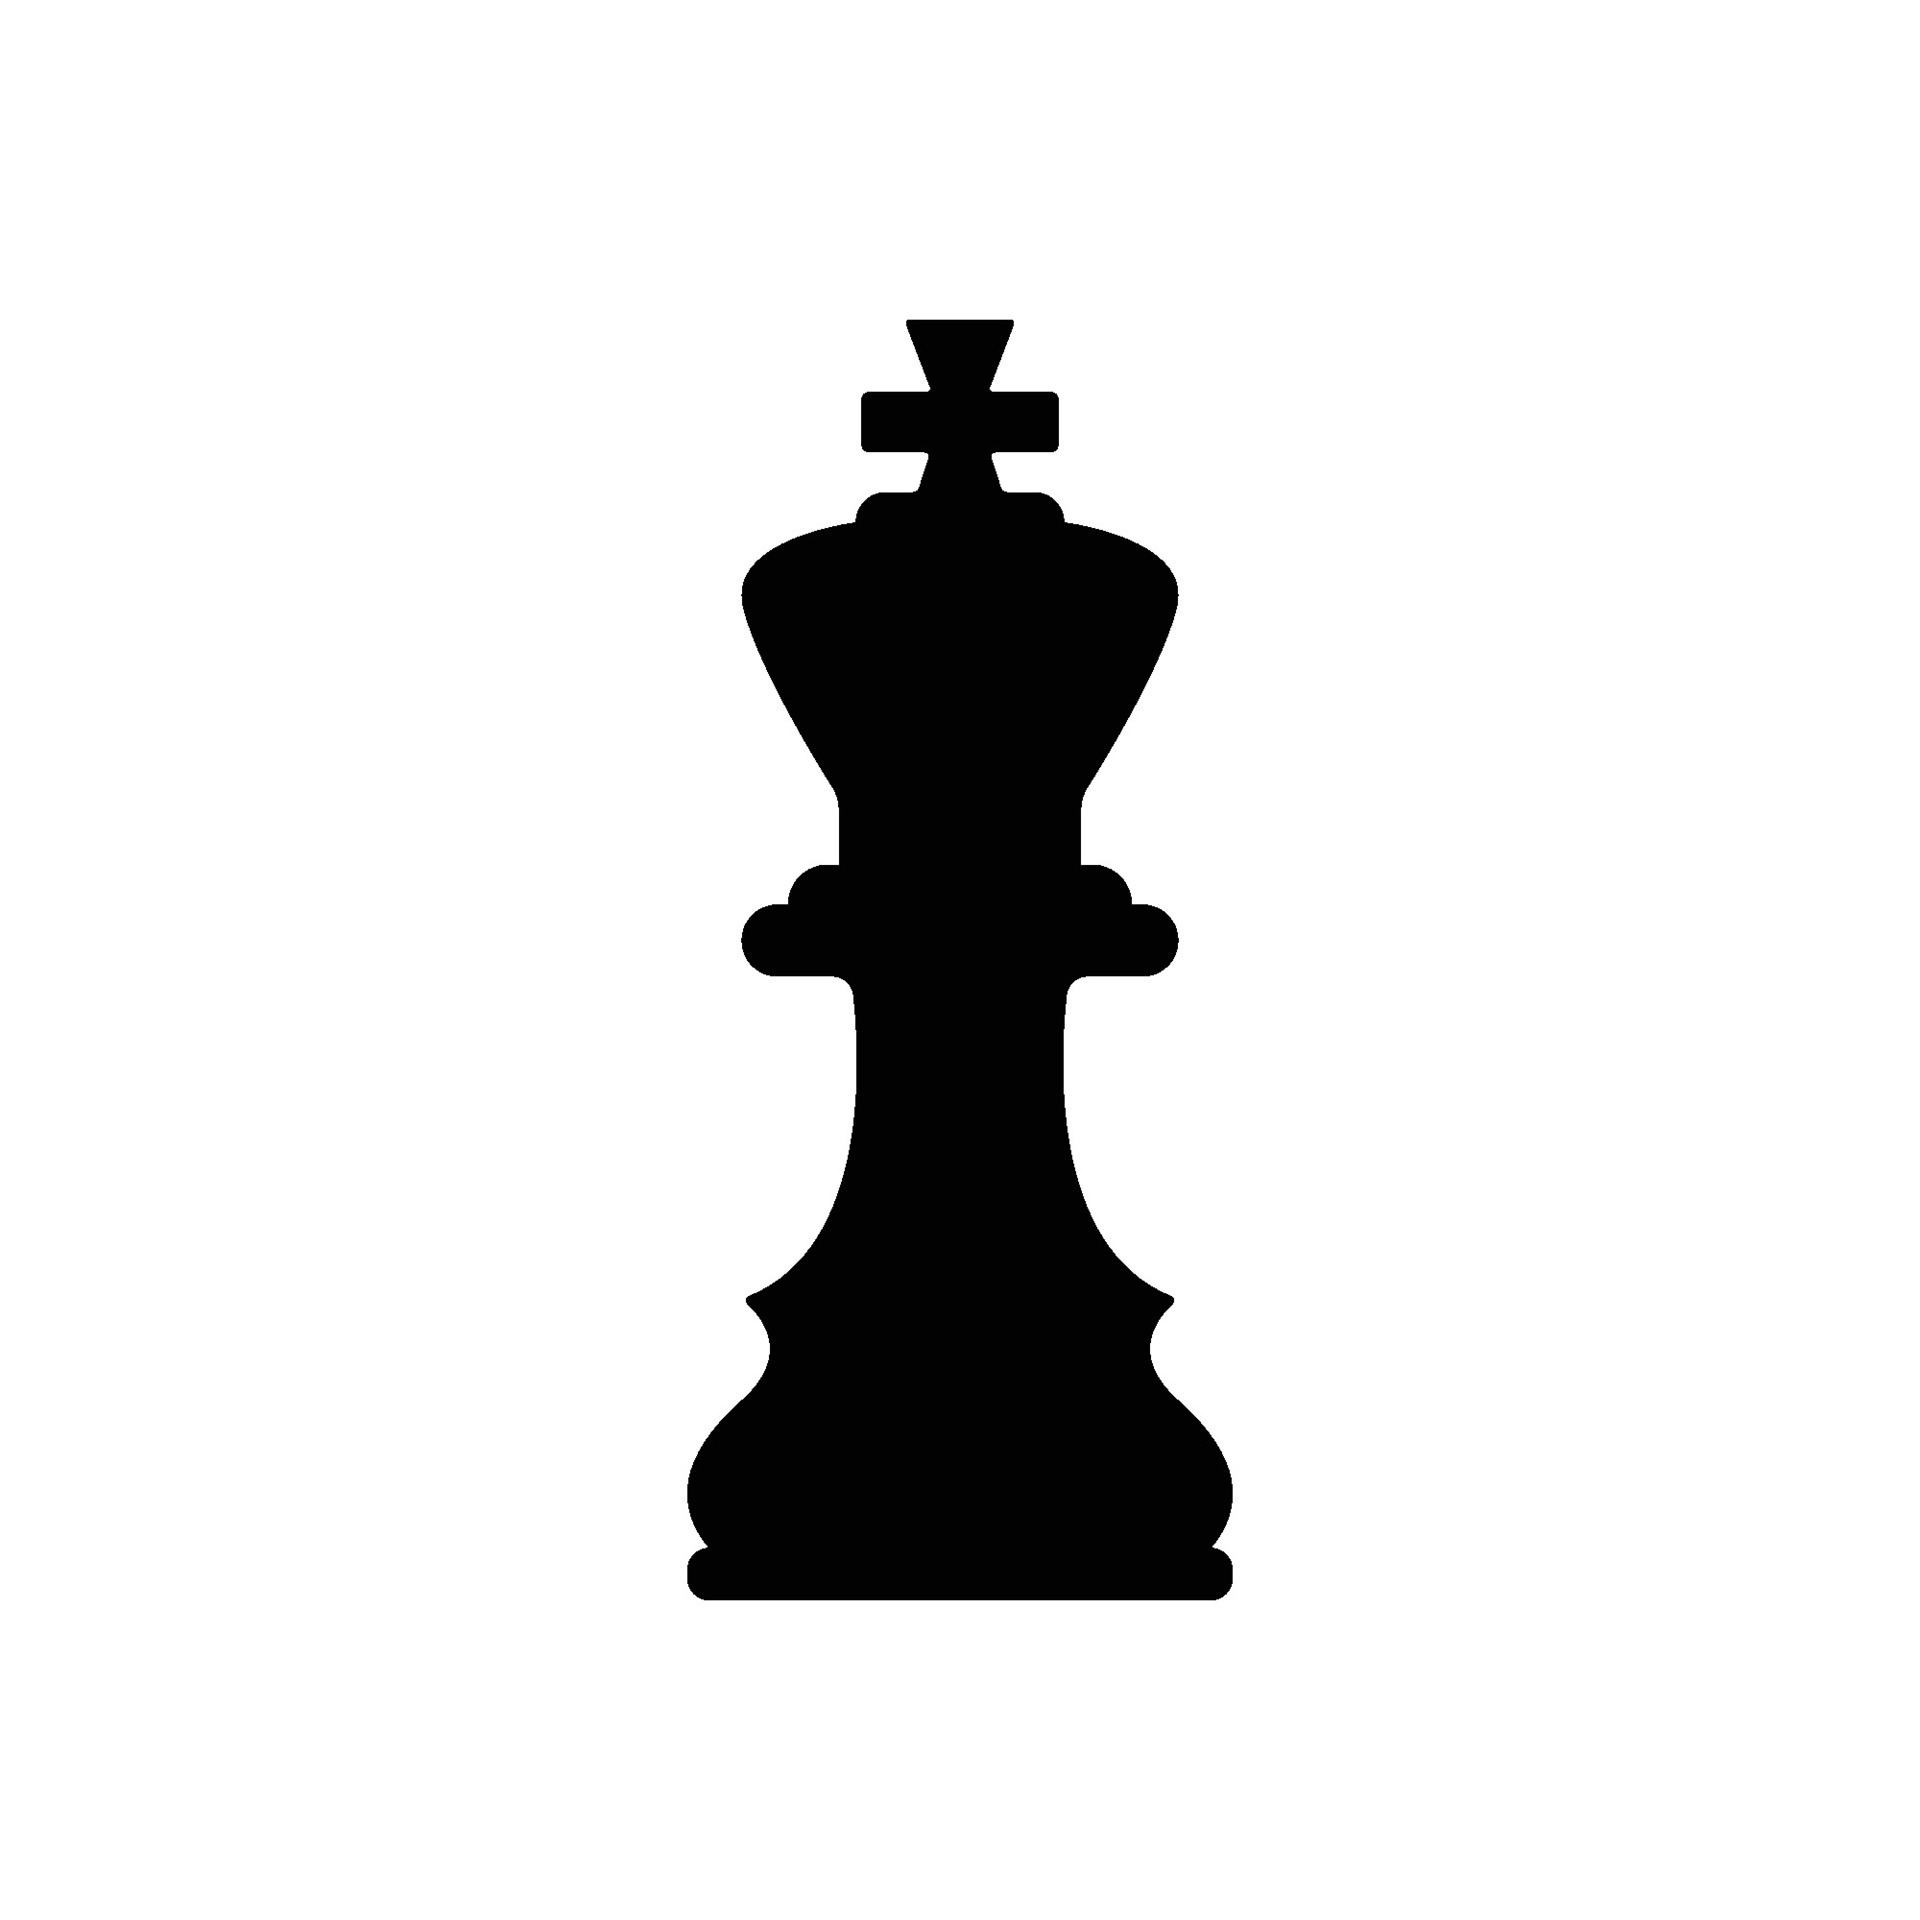 chess king piece 2494274 Vector Art at Vecteezy